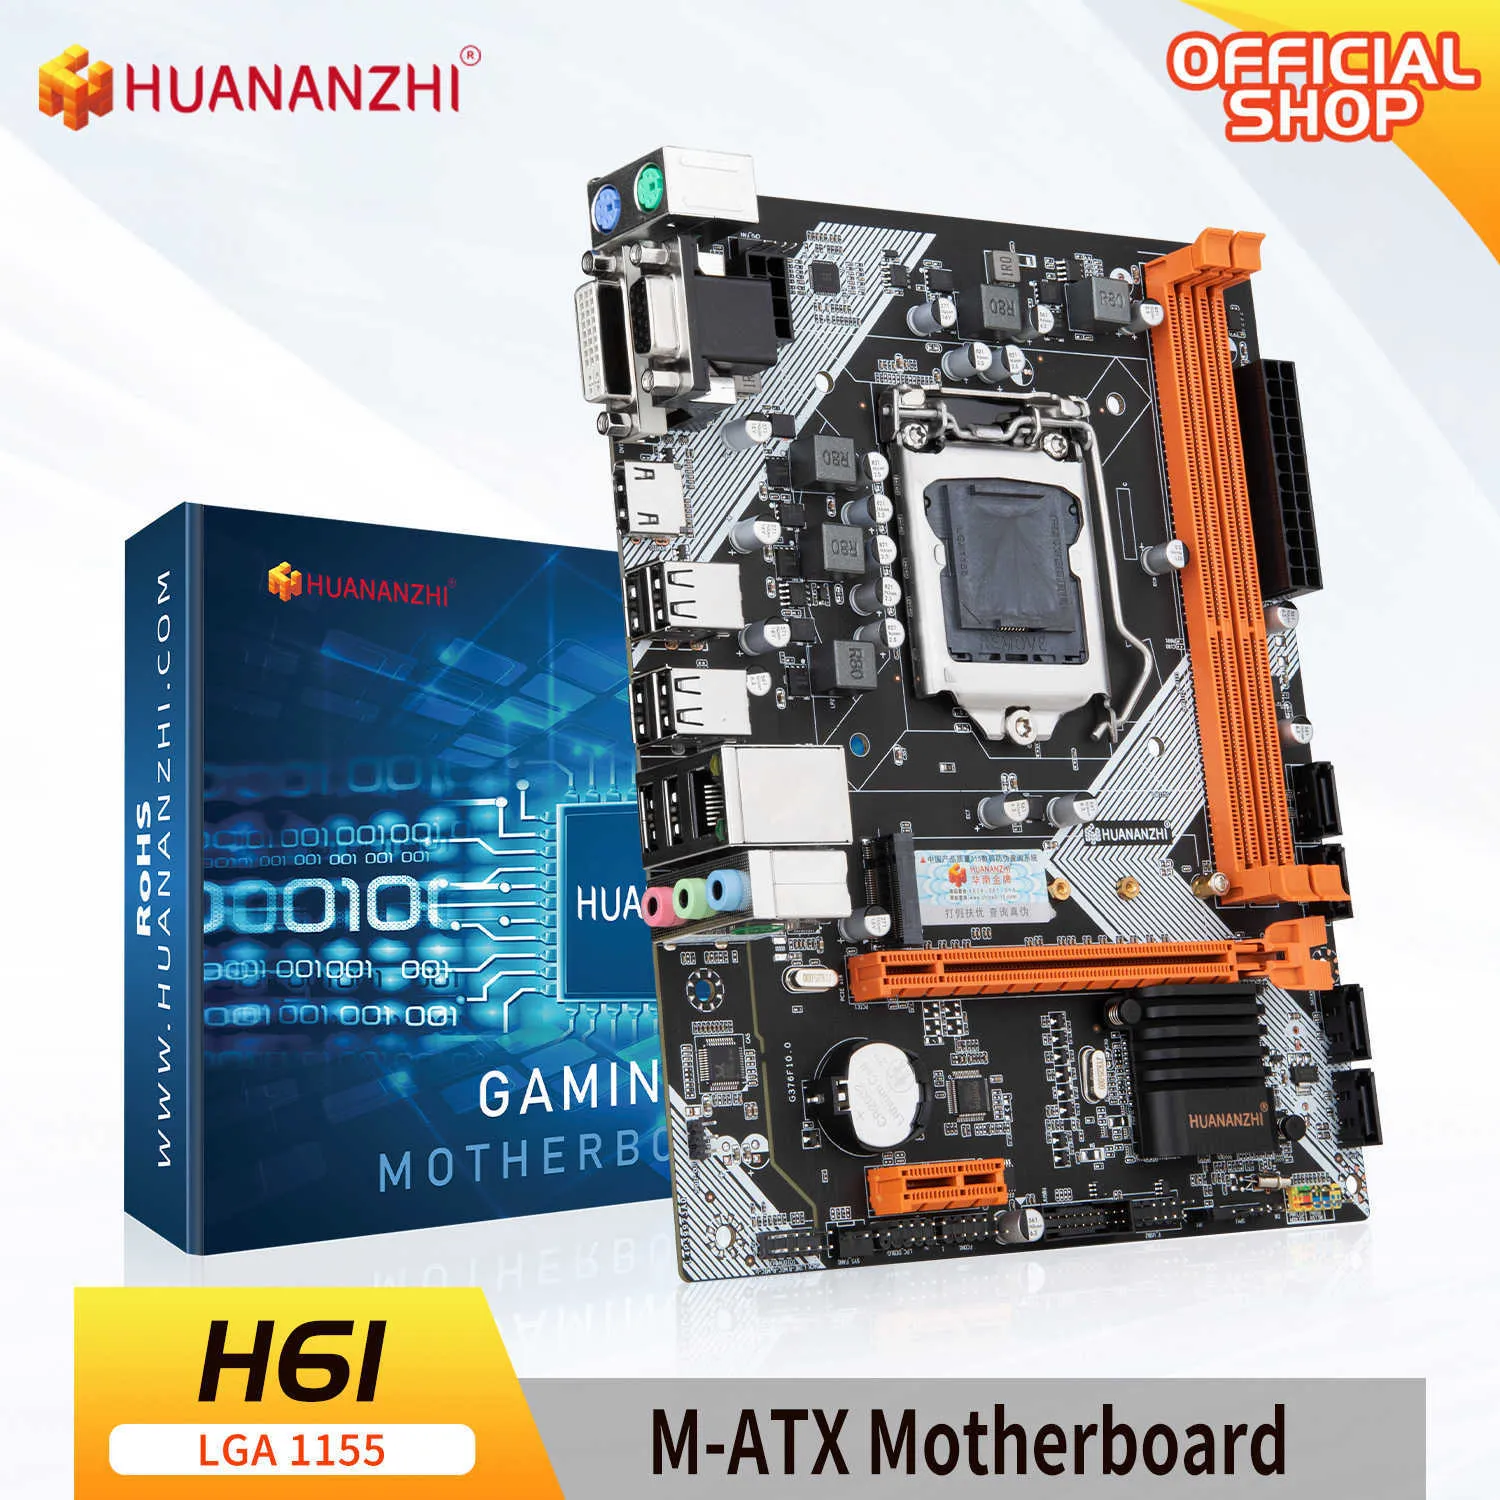 HUANANZHI H61 Motherboard M-ATX For Intel LGA 1155 Support i3 i5 i7 DDR3 1333/1600MHz 16GB SATA M.2 USB2.0 VGA HDMI-Compatible